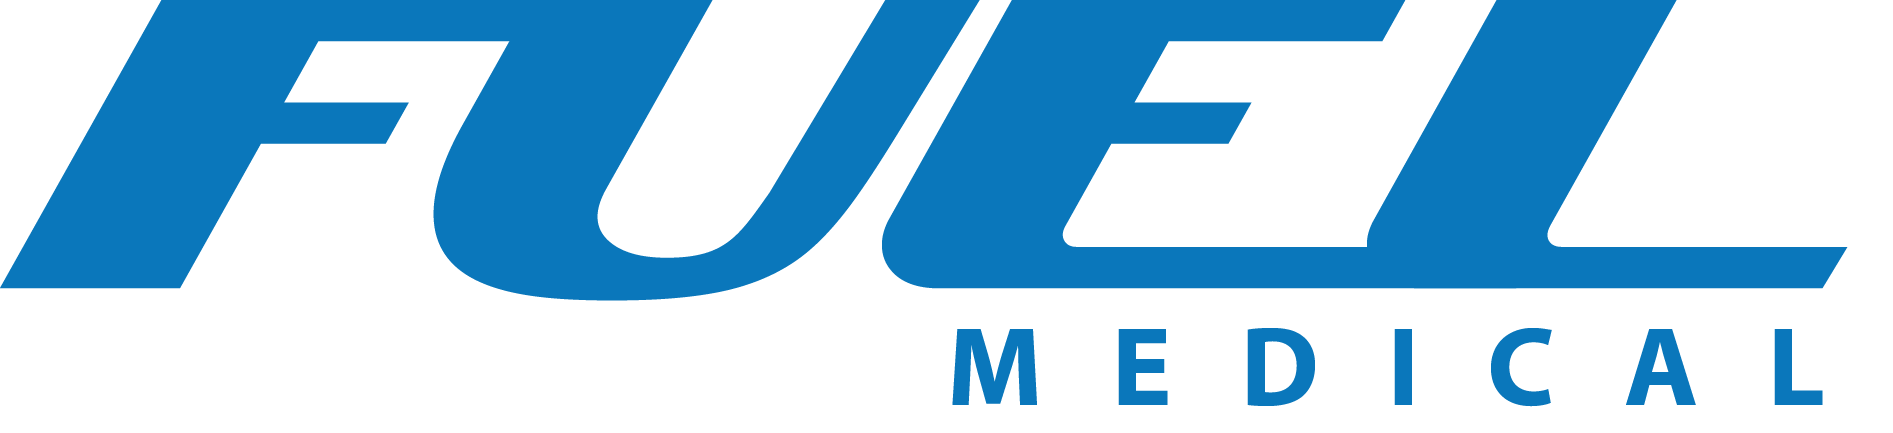 Fuel Medical logo